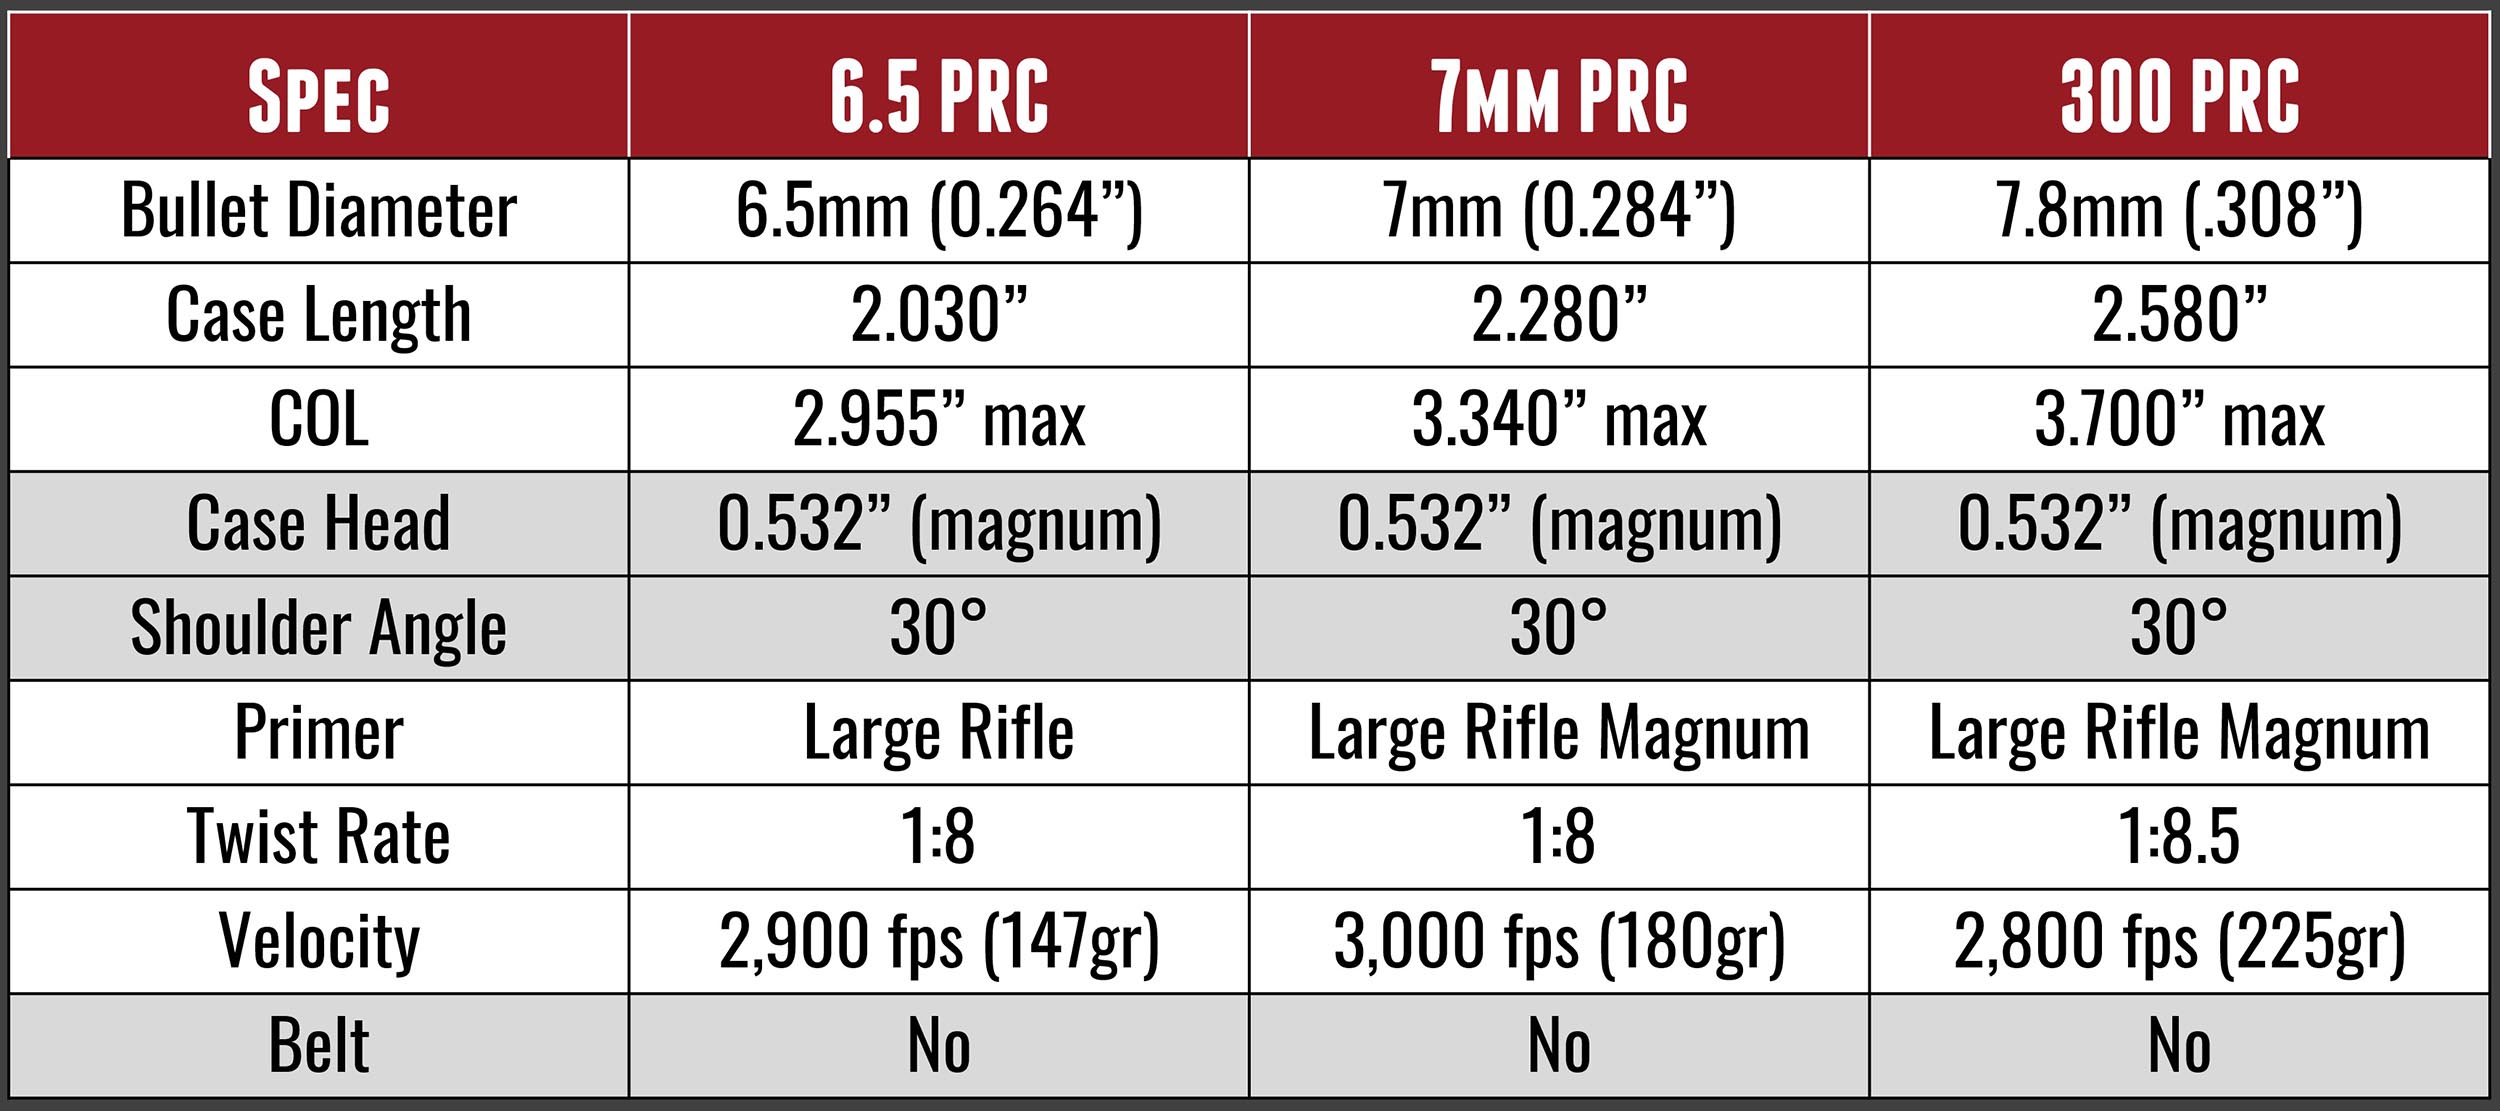 6.5 PRC vs 7mm PRC vs 300 PRC 2500 NEW 7mm PRC: Complete Overview – Ultimate Reloader